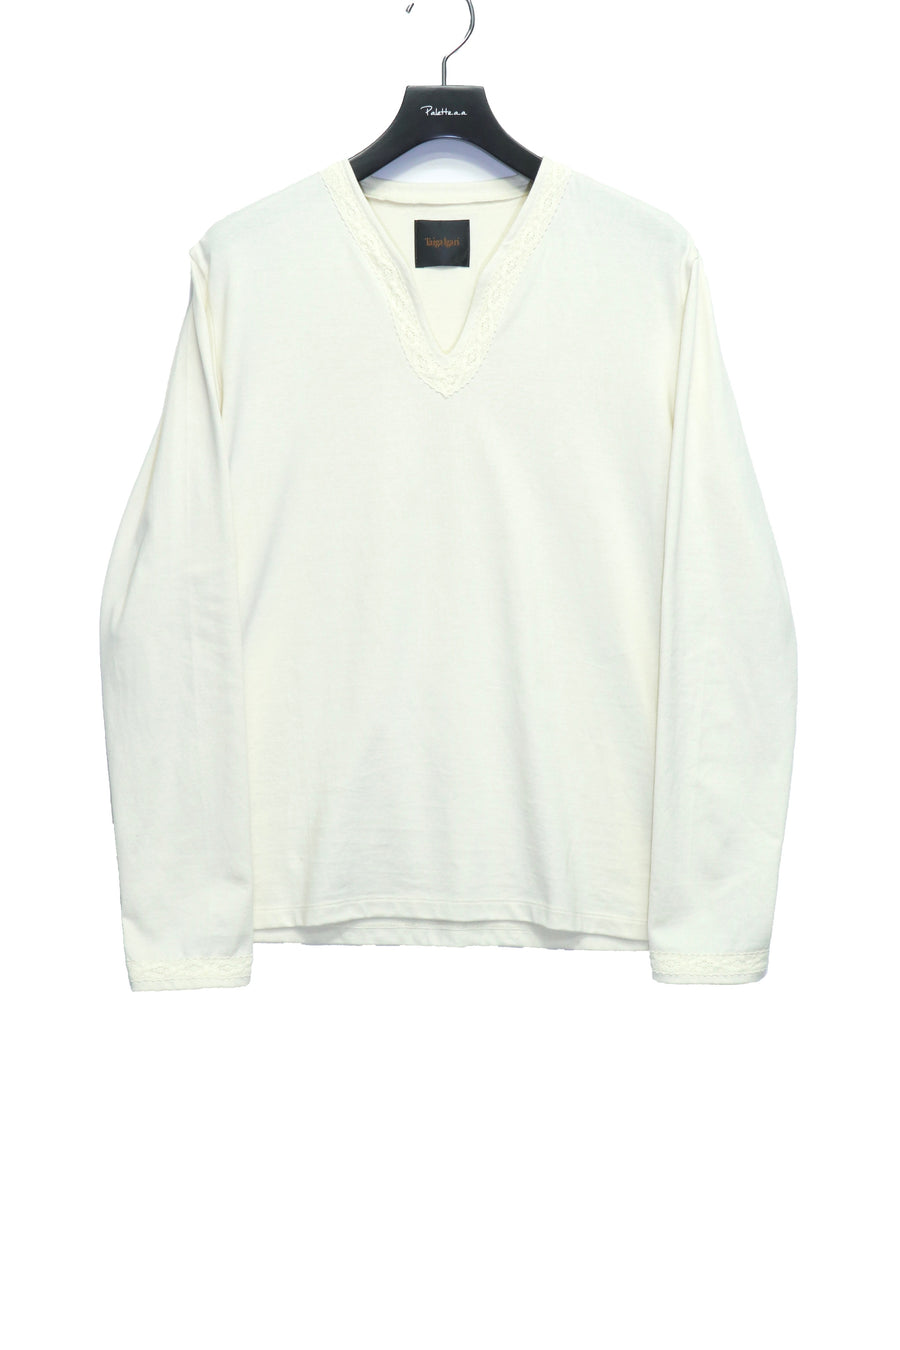 Taiga Igari  Lace L/S T-shirt(OFF WHITE)